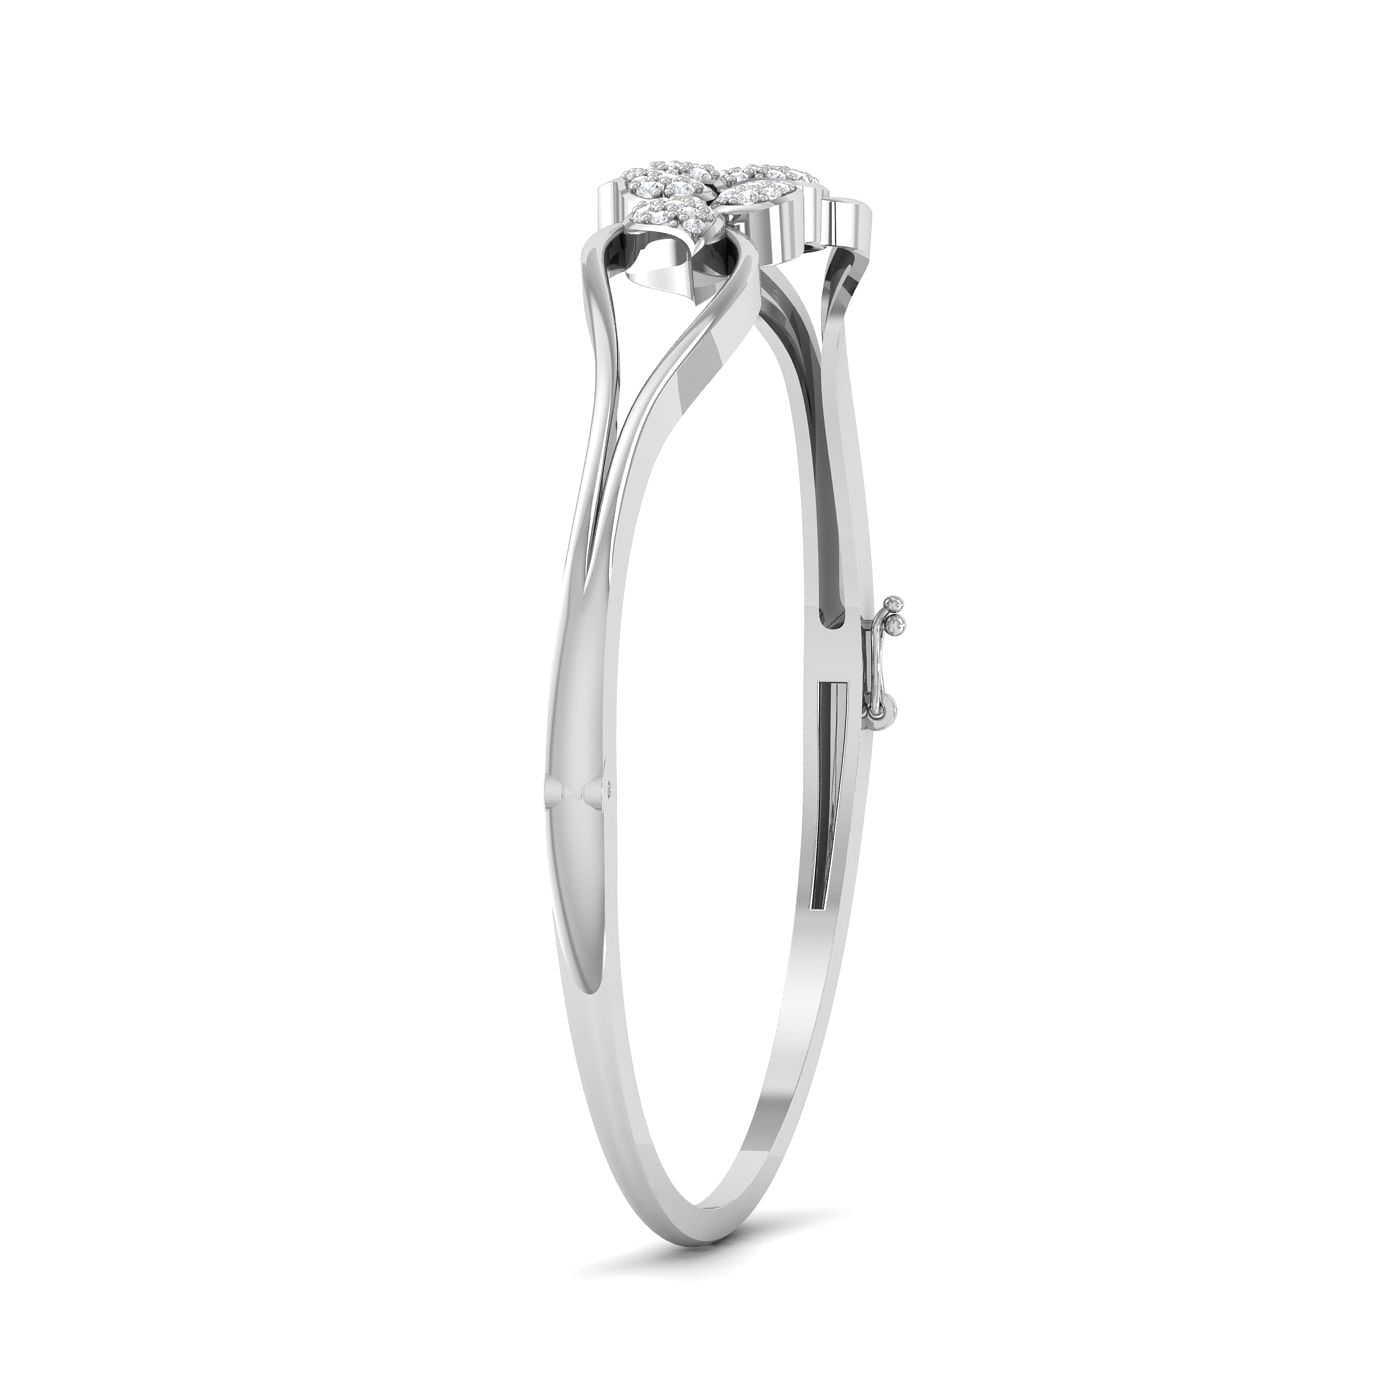 Designer wedding Aurora Diamond Bracelet With White Gold